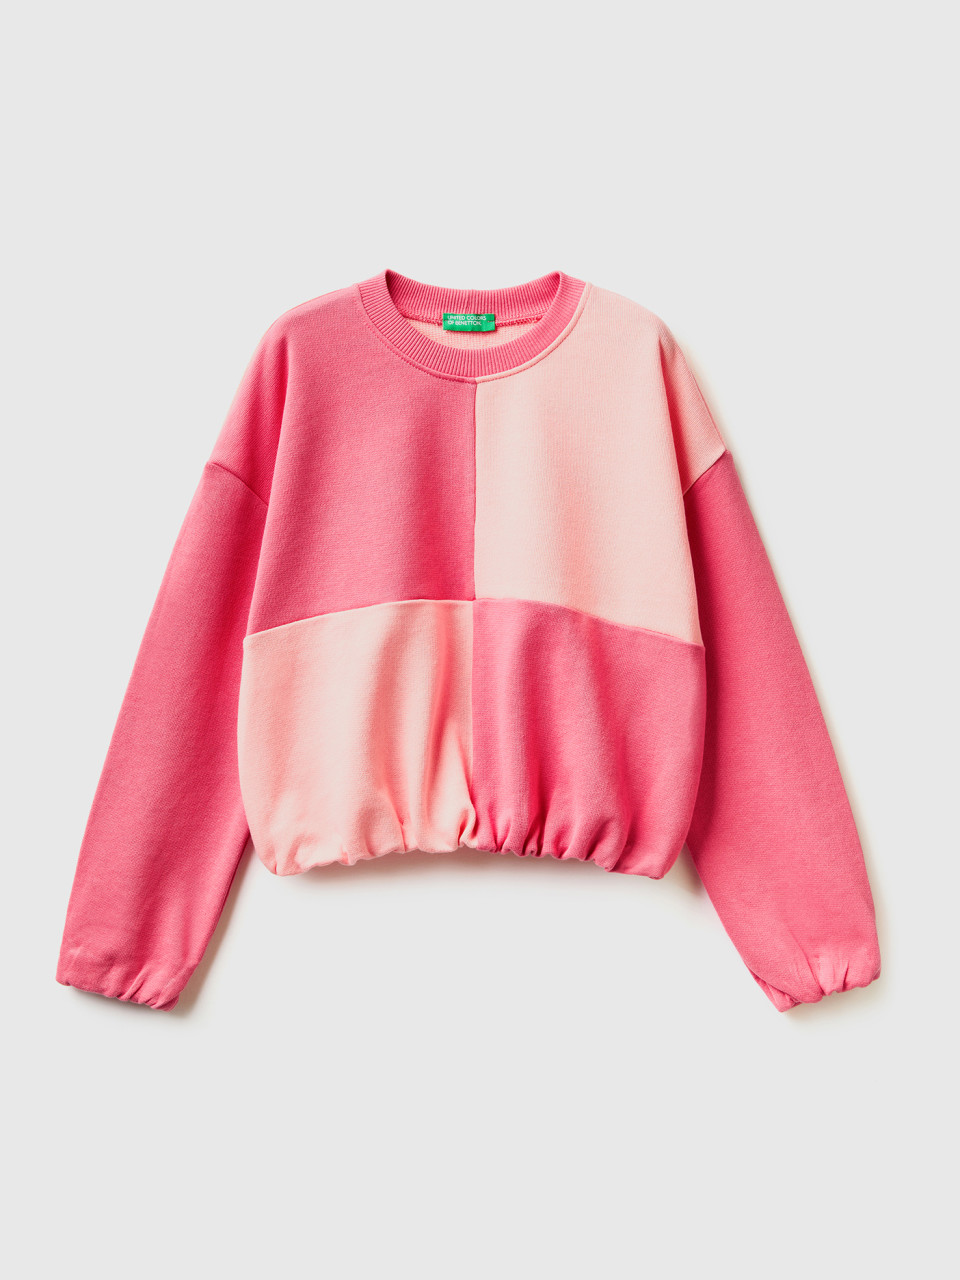 Benetton, Sweatshirt With Maxi Check, Pink, Kids